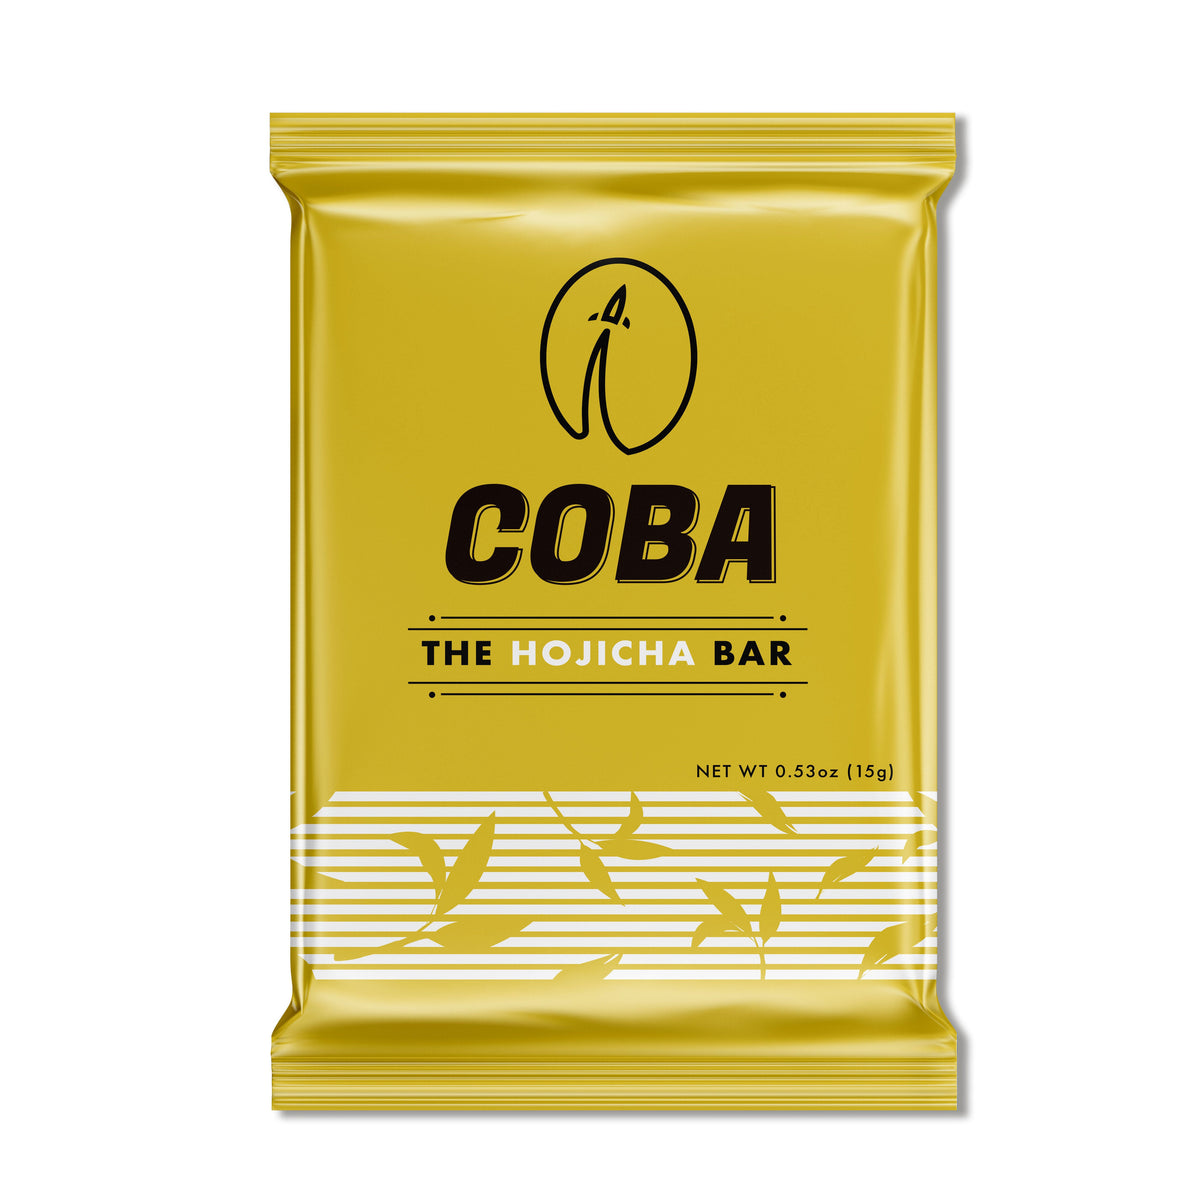 COBA, The Hojicha Bar